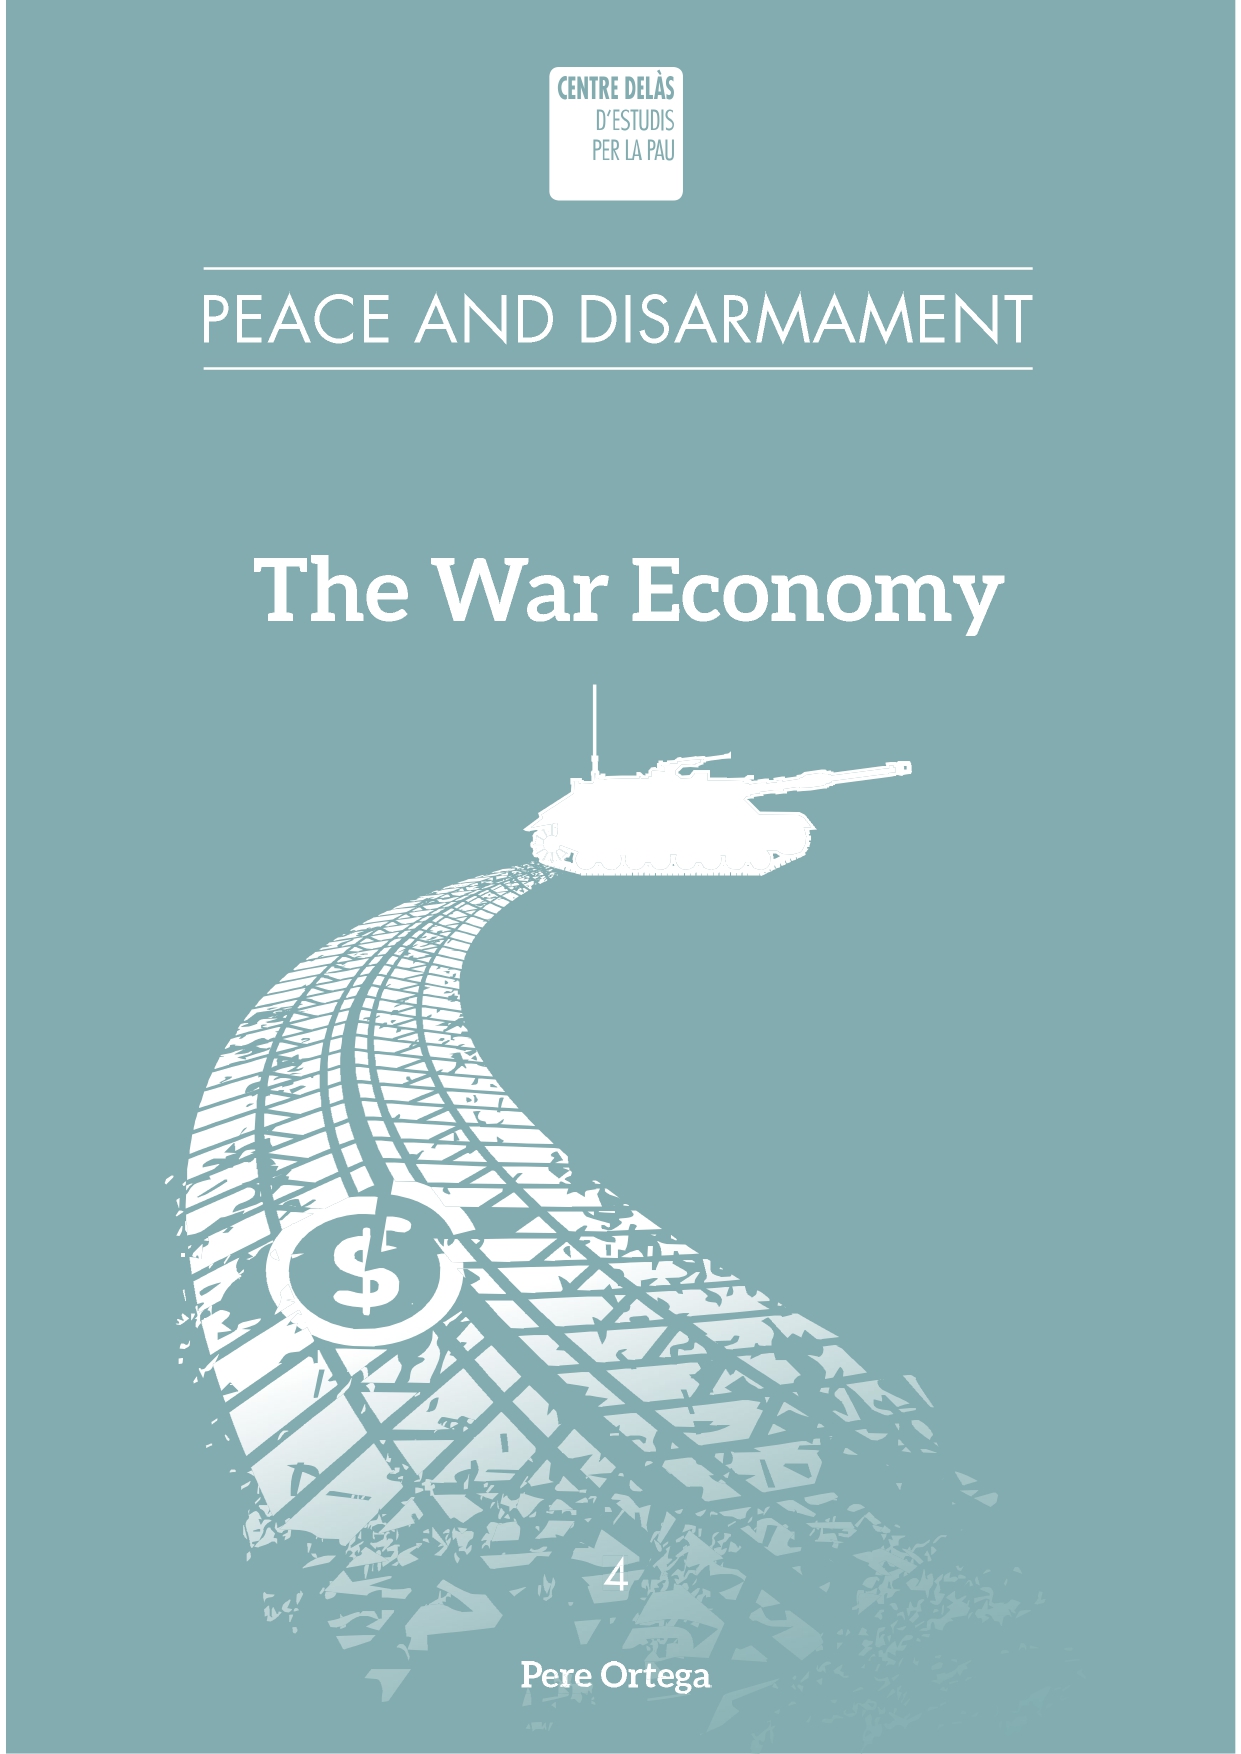 The War Economy